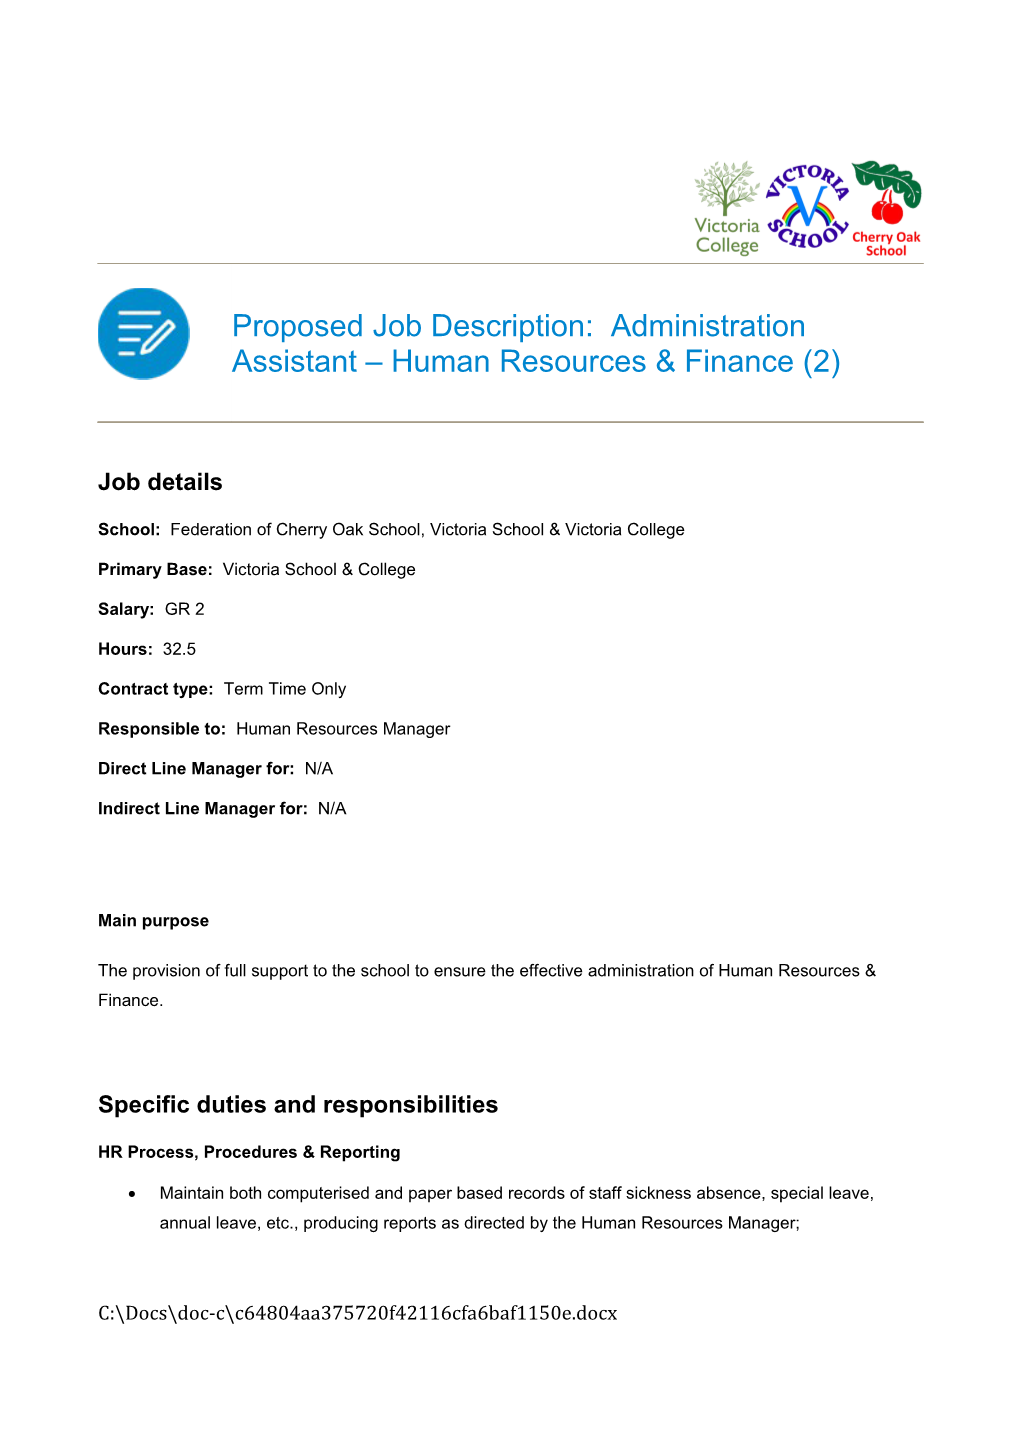 Proposed Job Description: Administration Assistant Human Resources & Finance (2)